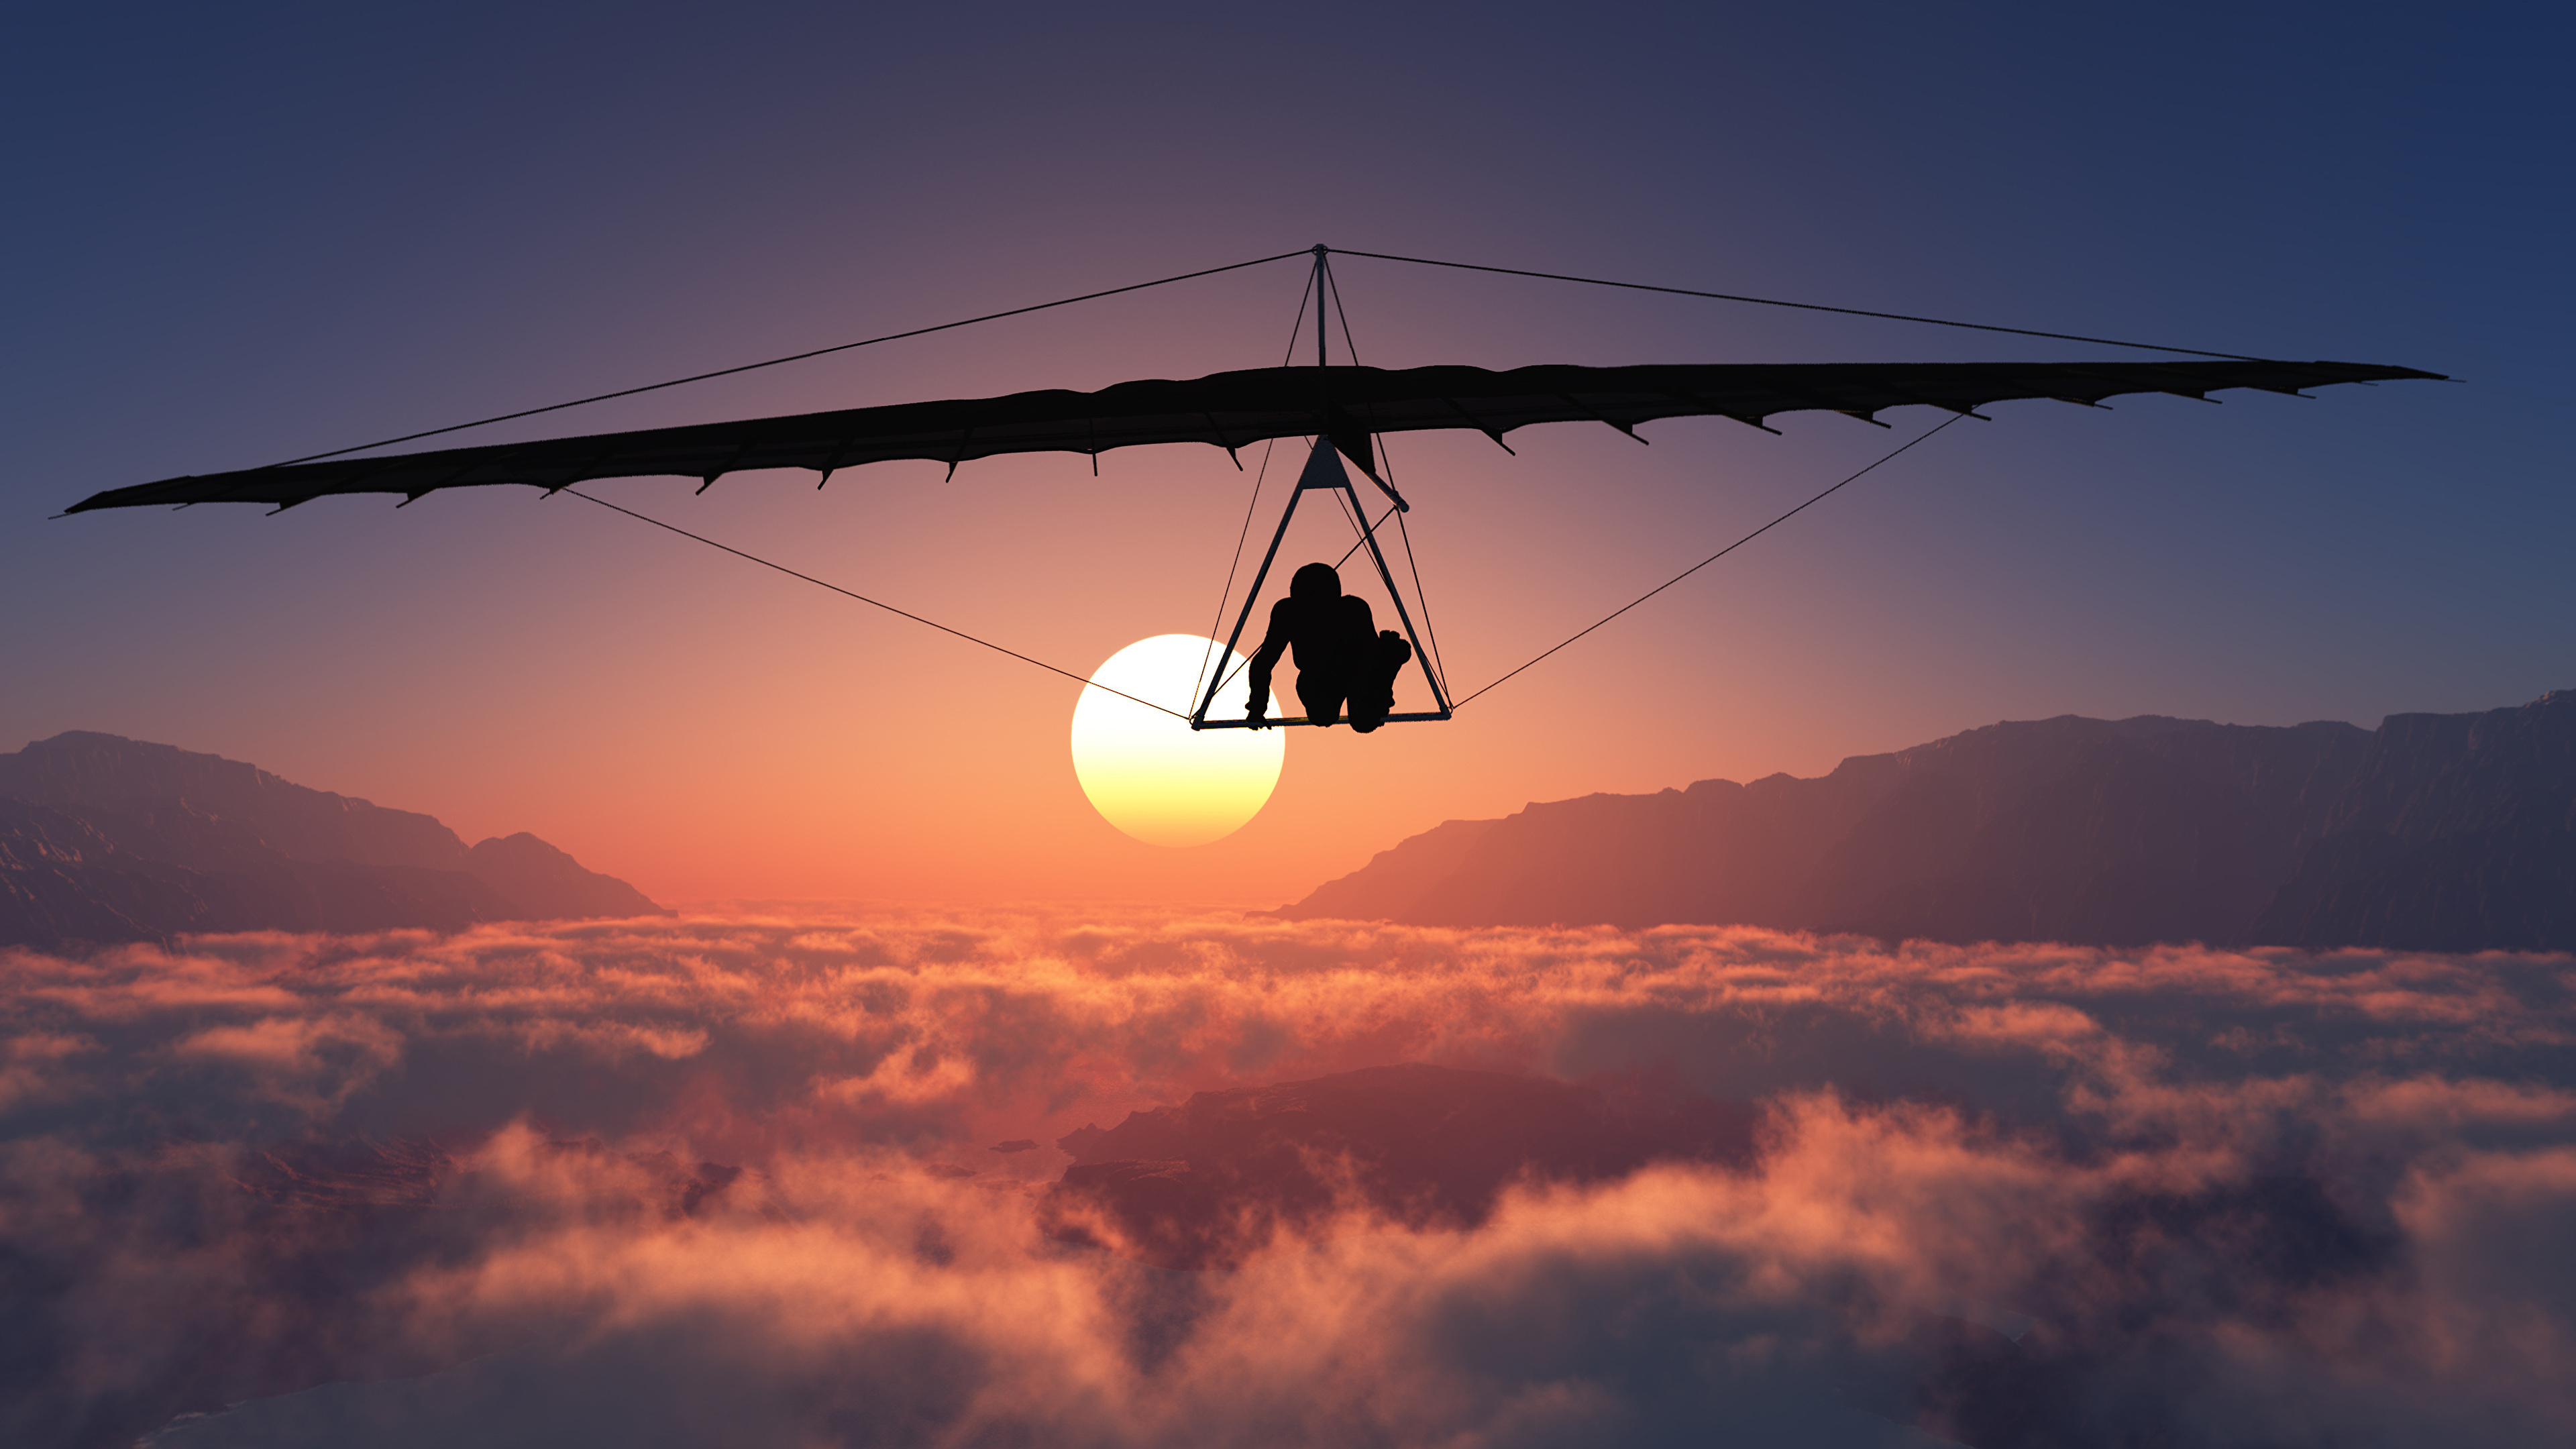 Paragliding: Hang Gliding, Pilot flies a light, non-motorized foot-launched heavier-than-air aircraft. 3840x2160 4K Wallpaper.